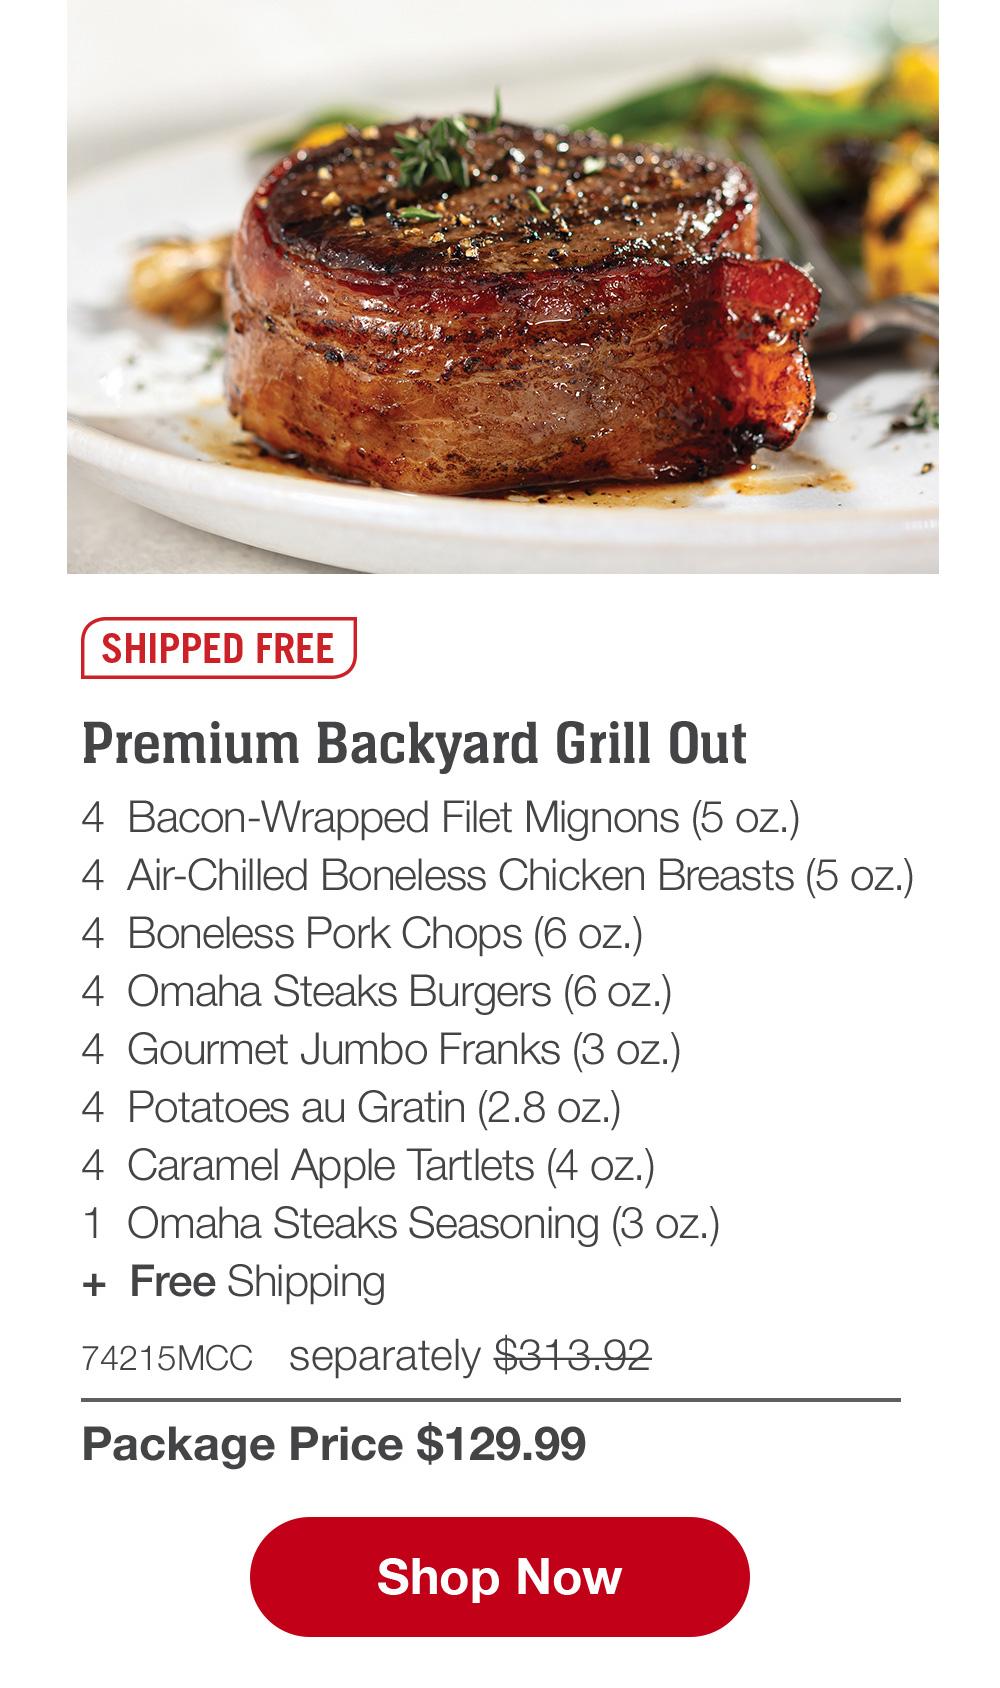 SHIPPED FREE | Premium Backyard Grill Out - 4 Bacon-Wrapped Filet Mignons (5 oz.) - 4 Air-Chilled Boneless Chicken Breasts (5 oz.) - 4 Boneless Pork Chops (6 oz.) - 4 Omaha Steaks Burgers (6 oz.) - 4 Gourmet Jumbo Franks (3 oz.) - 4 Potatoes au Gratin (2.8 oz.) - 4 Caramel Apple Tartlets (4 oz.) - 1 Omaha Steaks Seasoning (3 oz.) + Free Shipping - 74215MCC separately $313.92 | Package Price $129.99 || Shop Now